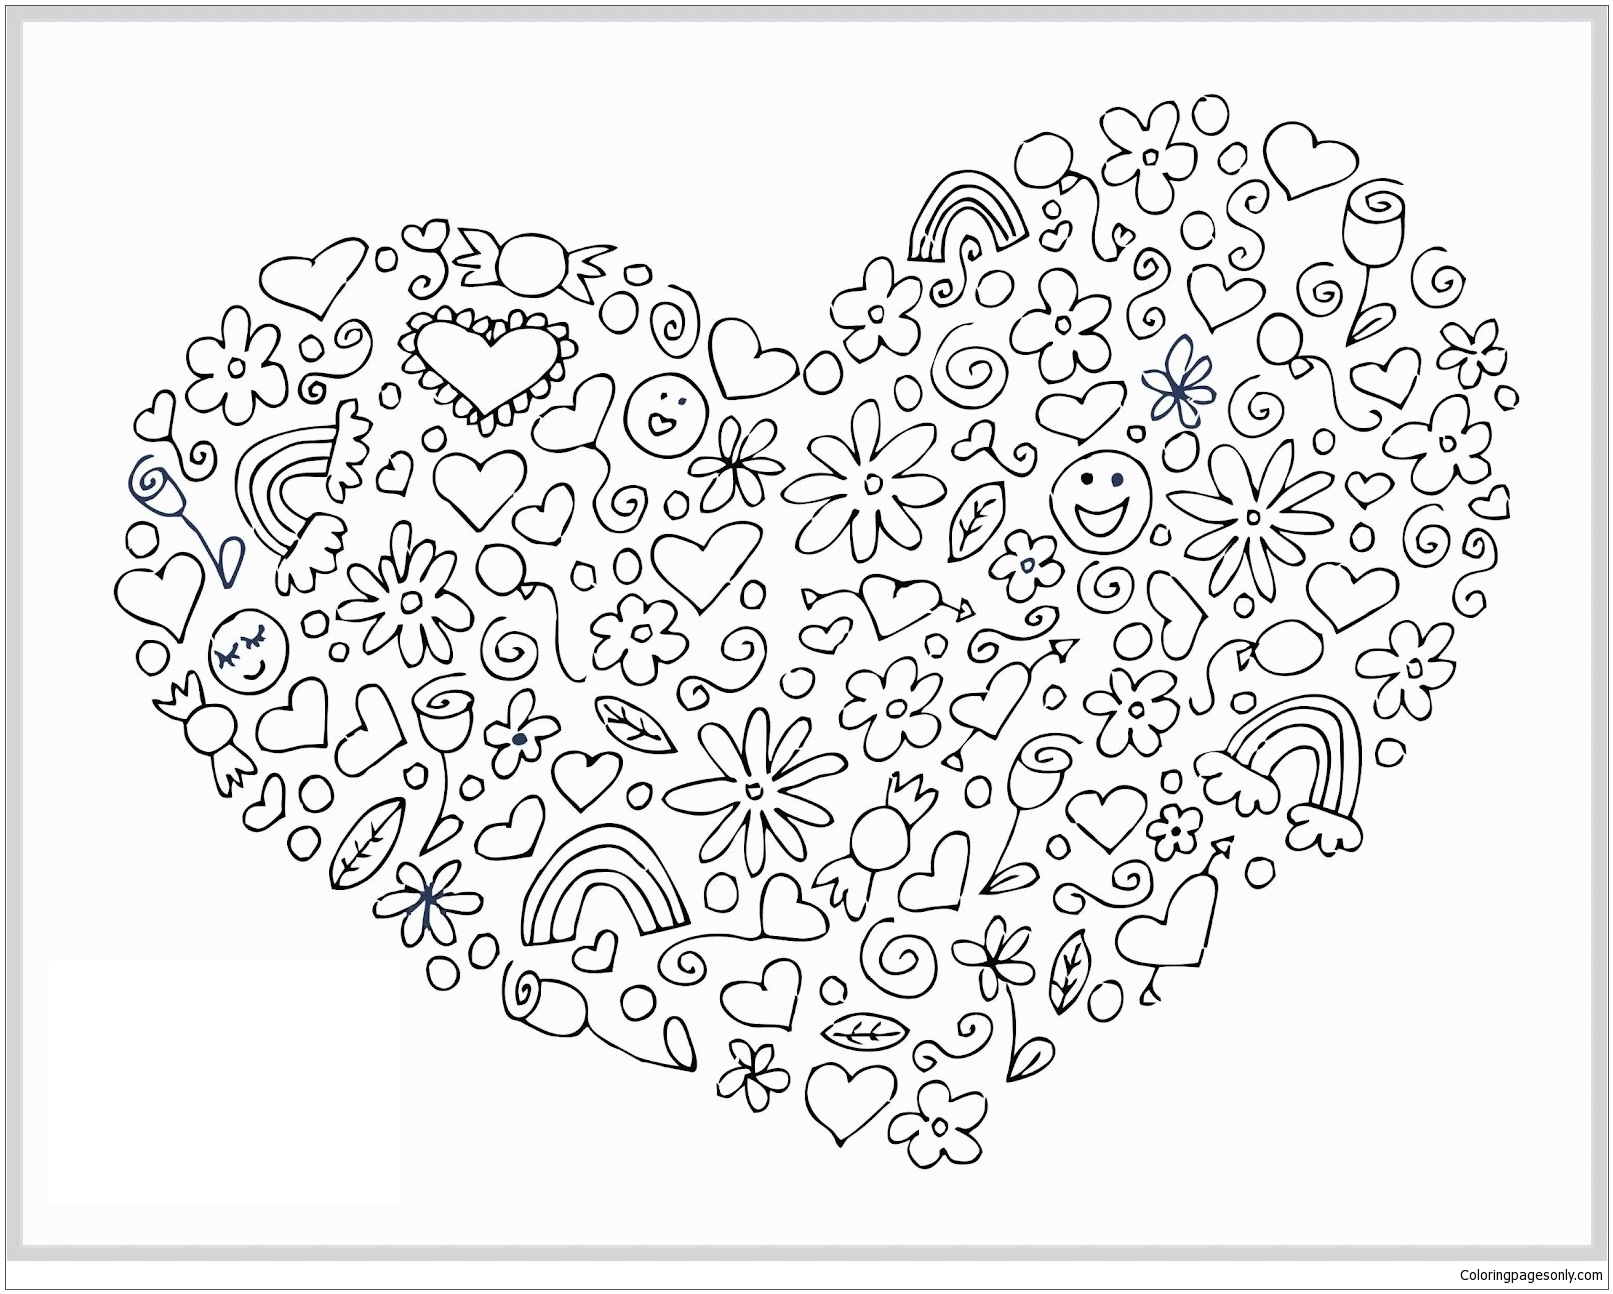 mandala-heart-coloring-page-free-printable-coloring-pages